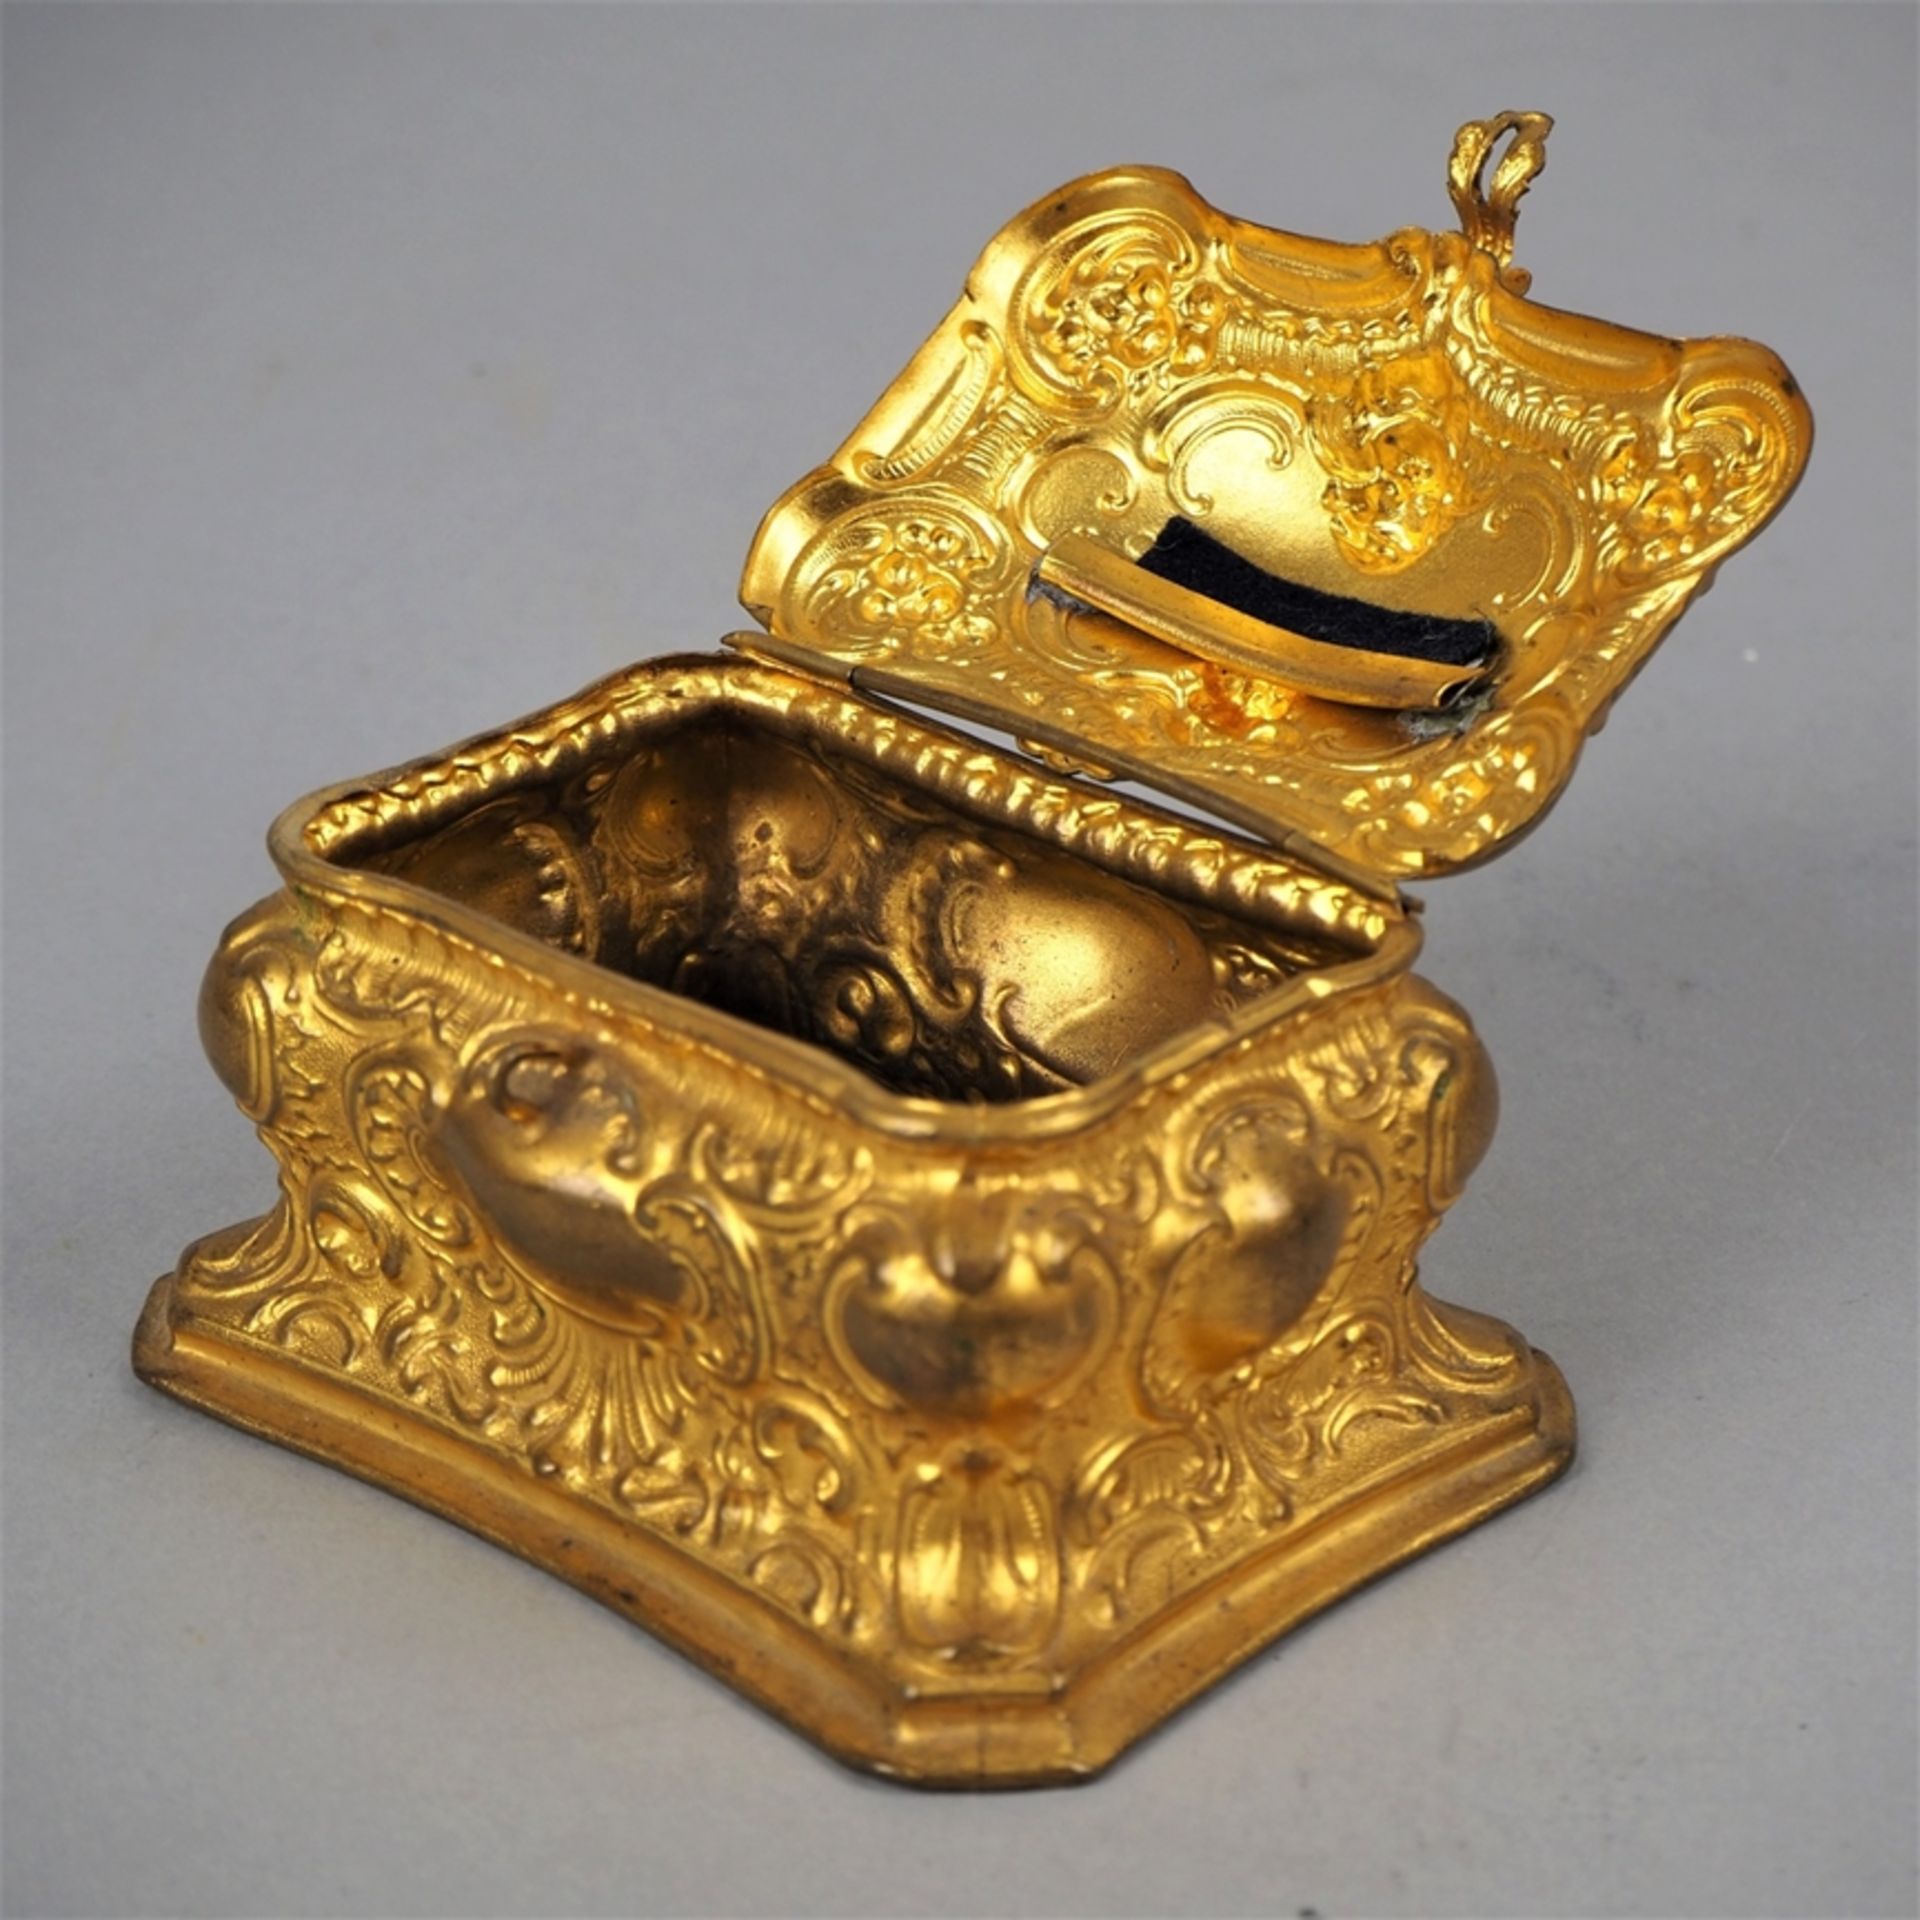 Art Nouveau brass money box, around 1890 - Image 3 of 3